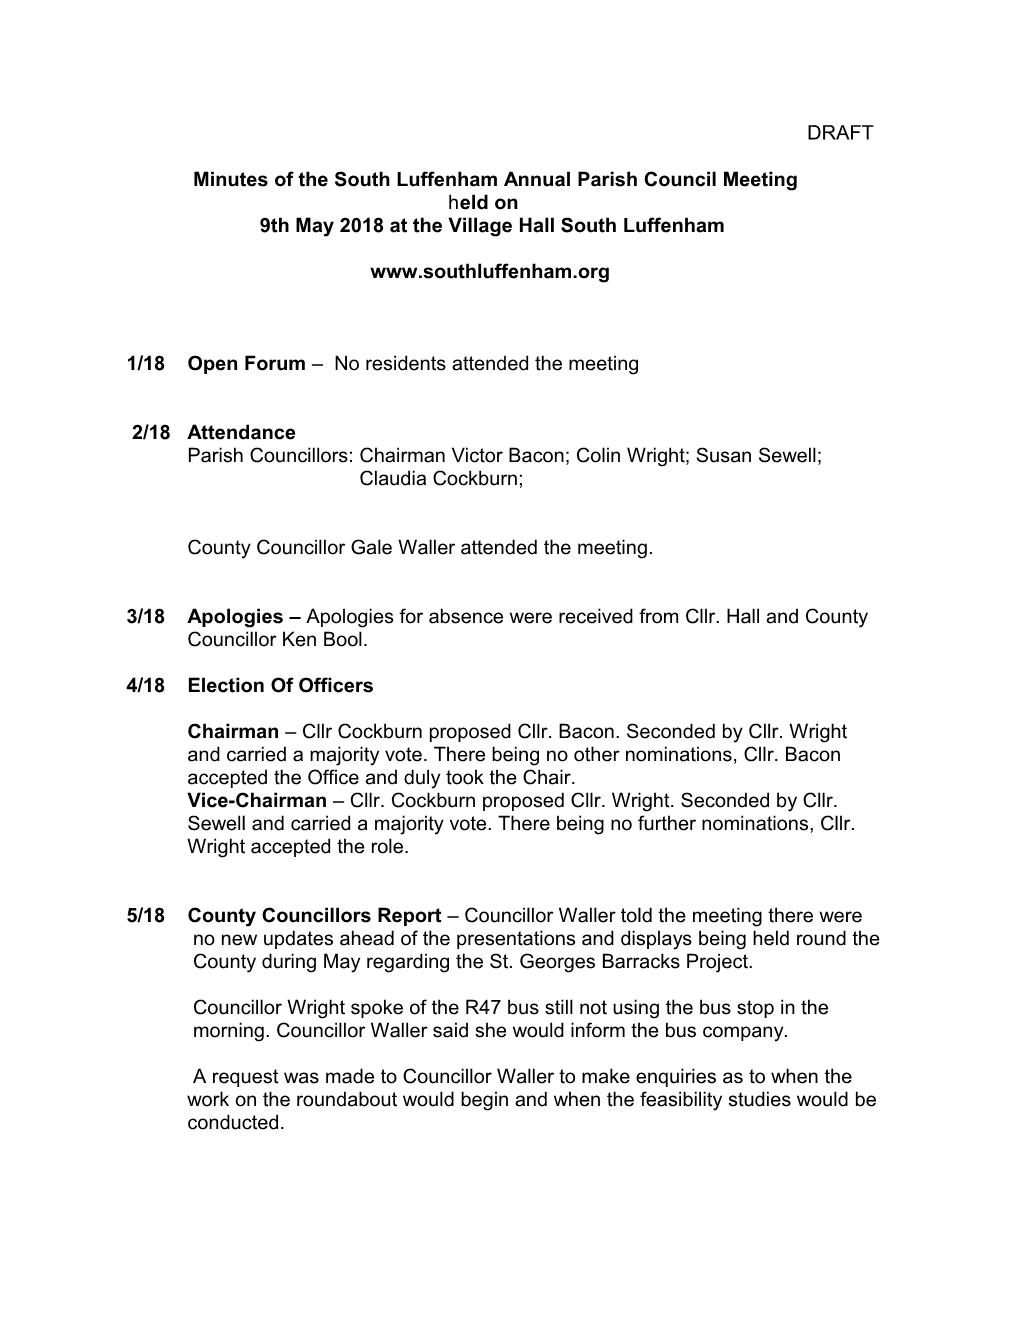 Minutes of the South Luffenham Annual Parish Council Meeting